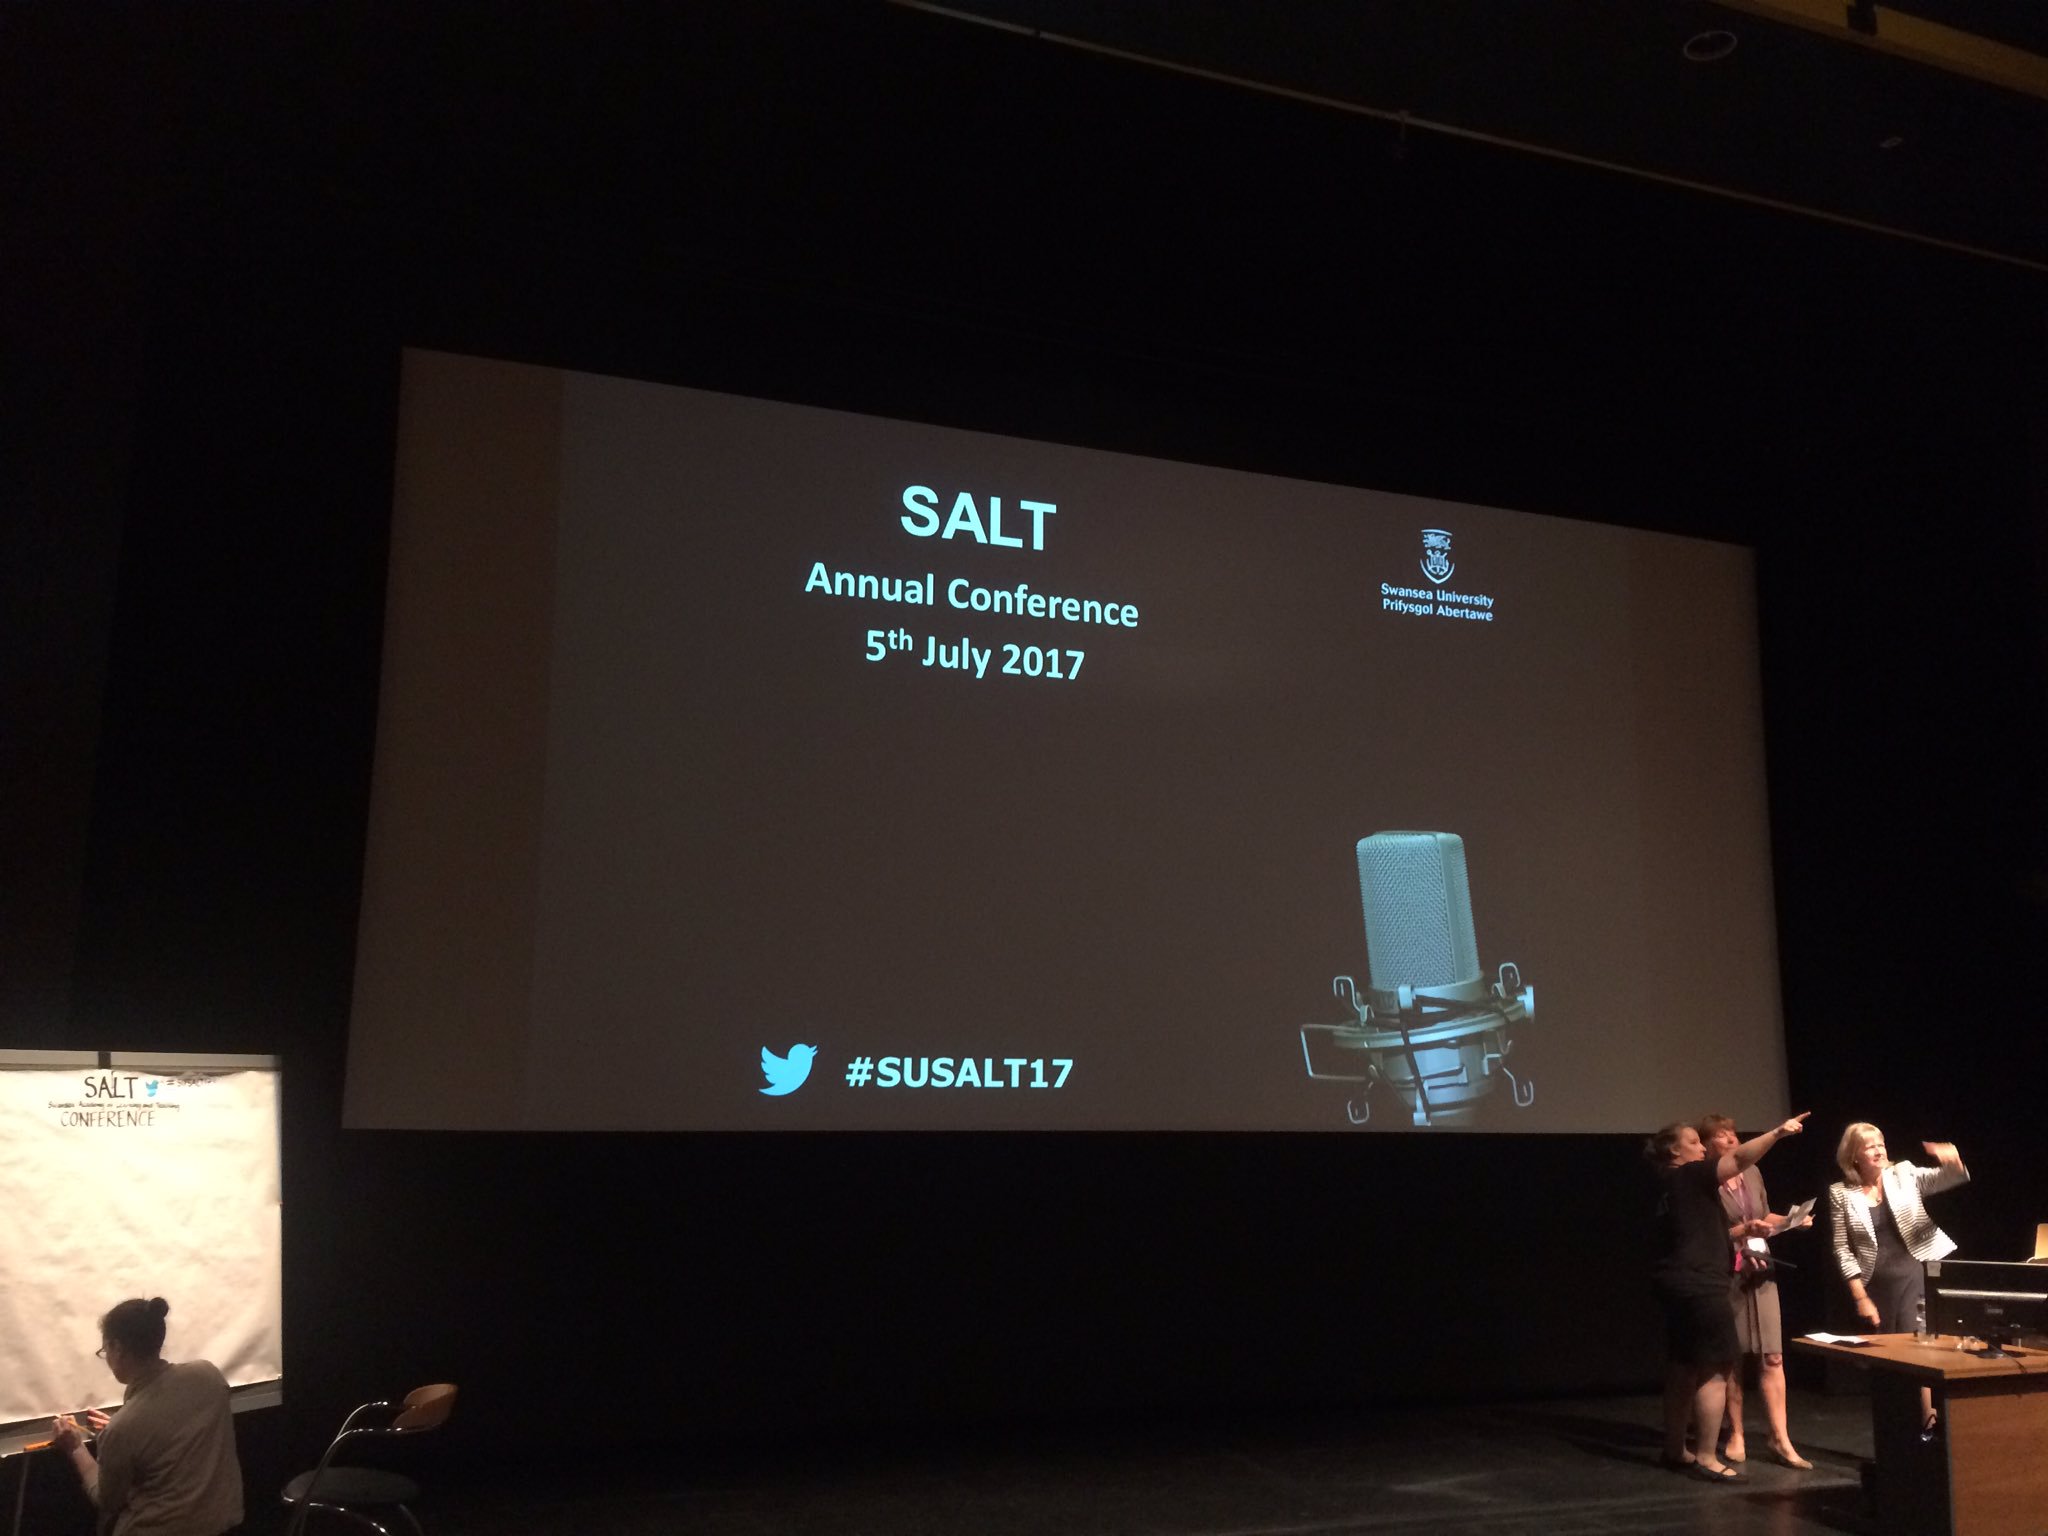 Great team, great organisation #SUSalt17 https://t.co/ry4sOanmFH